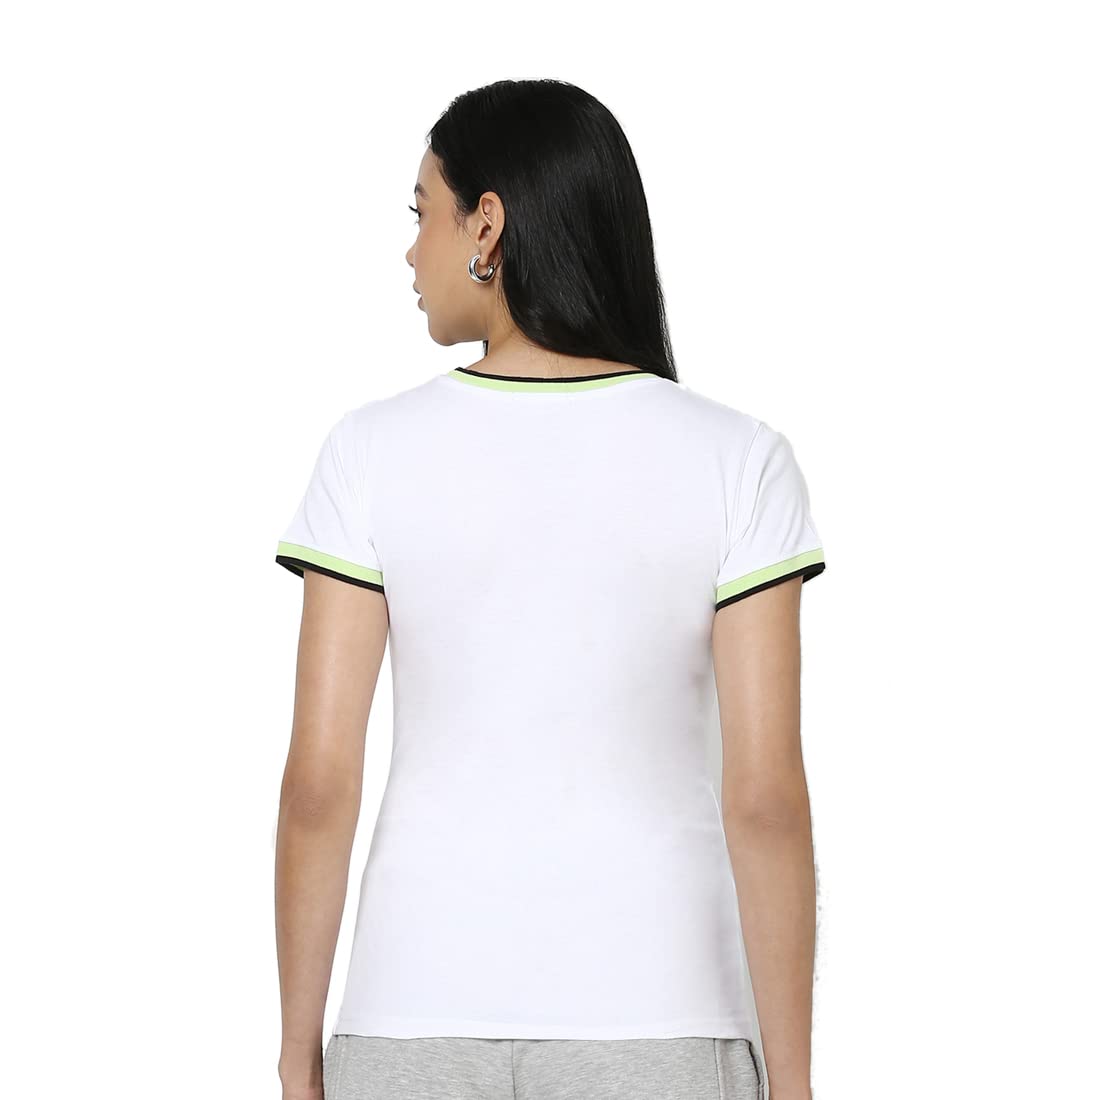 Bewakoof Women Plain Solid Half Sleeve Round Neck T-Shirt